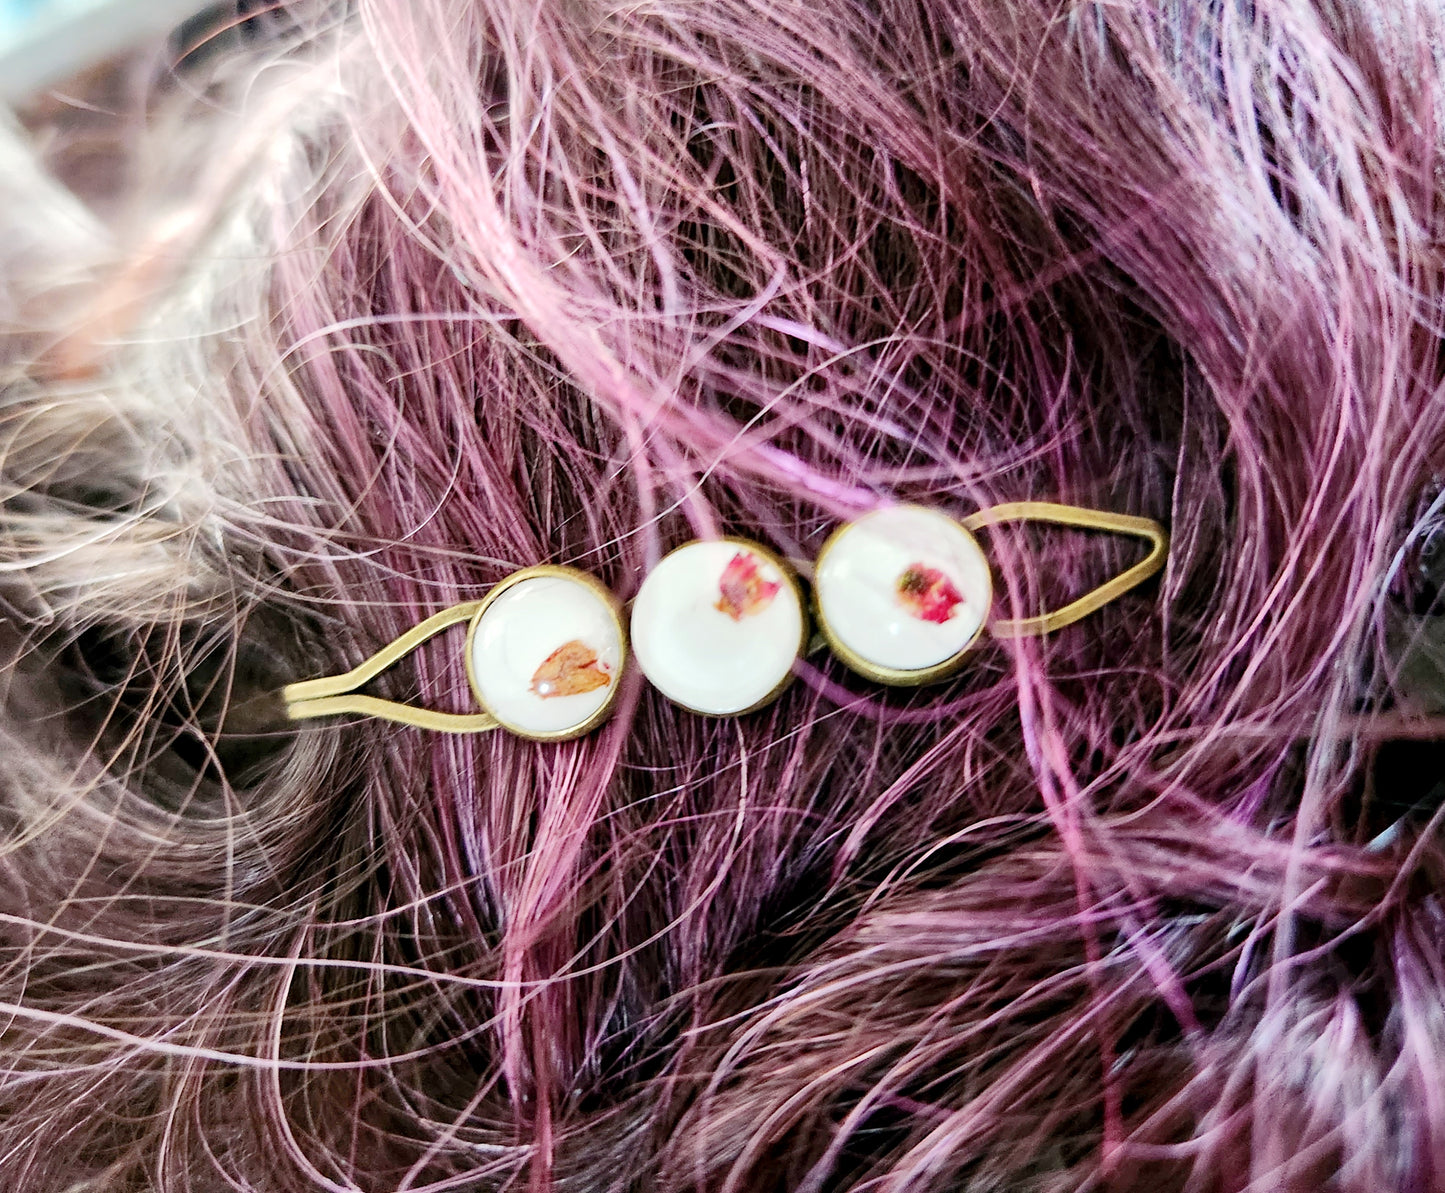 Small hair clips with three tundra gems